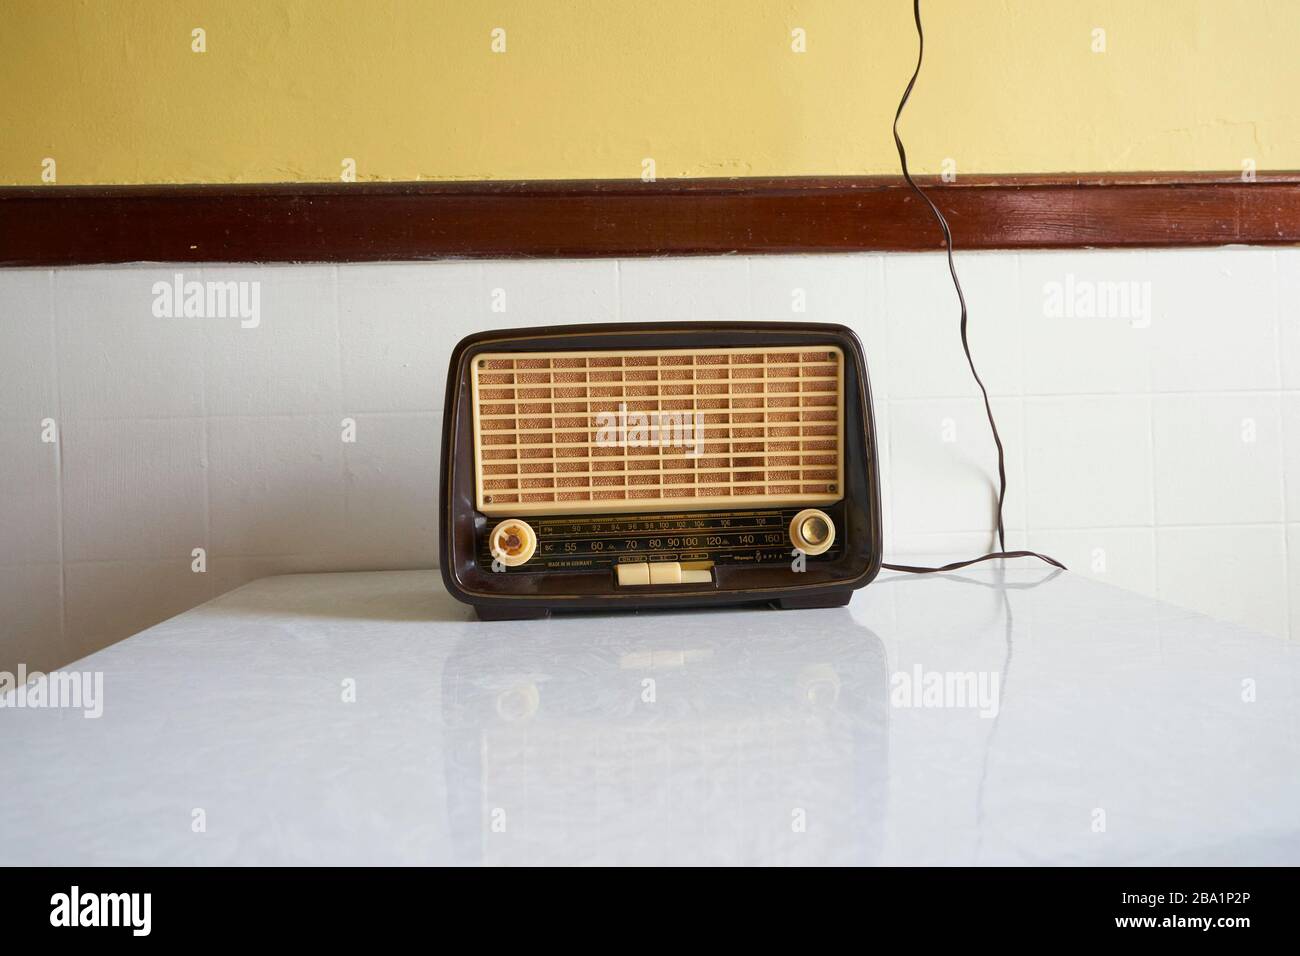 Vintage West German, Opta brand radio. Stock Photo